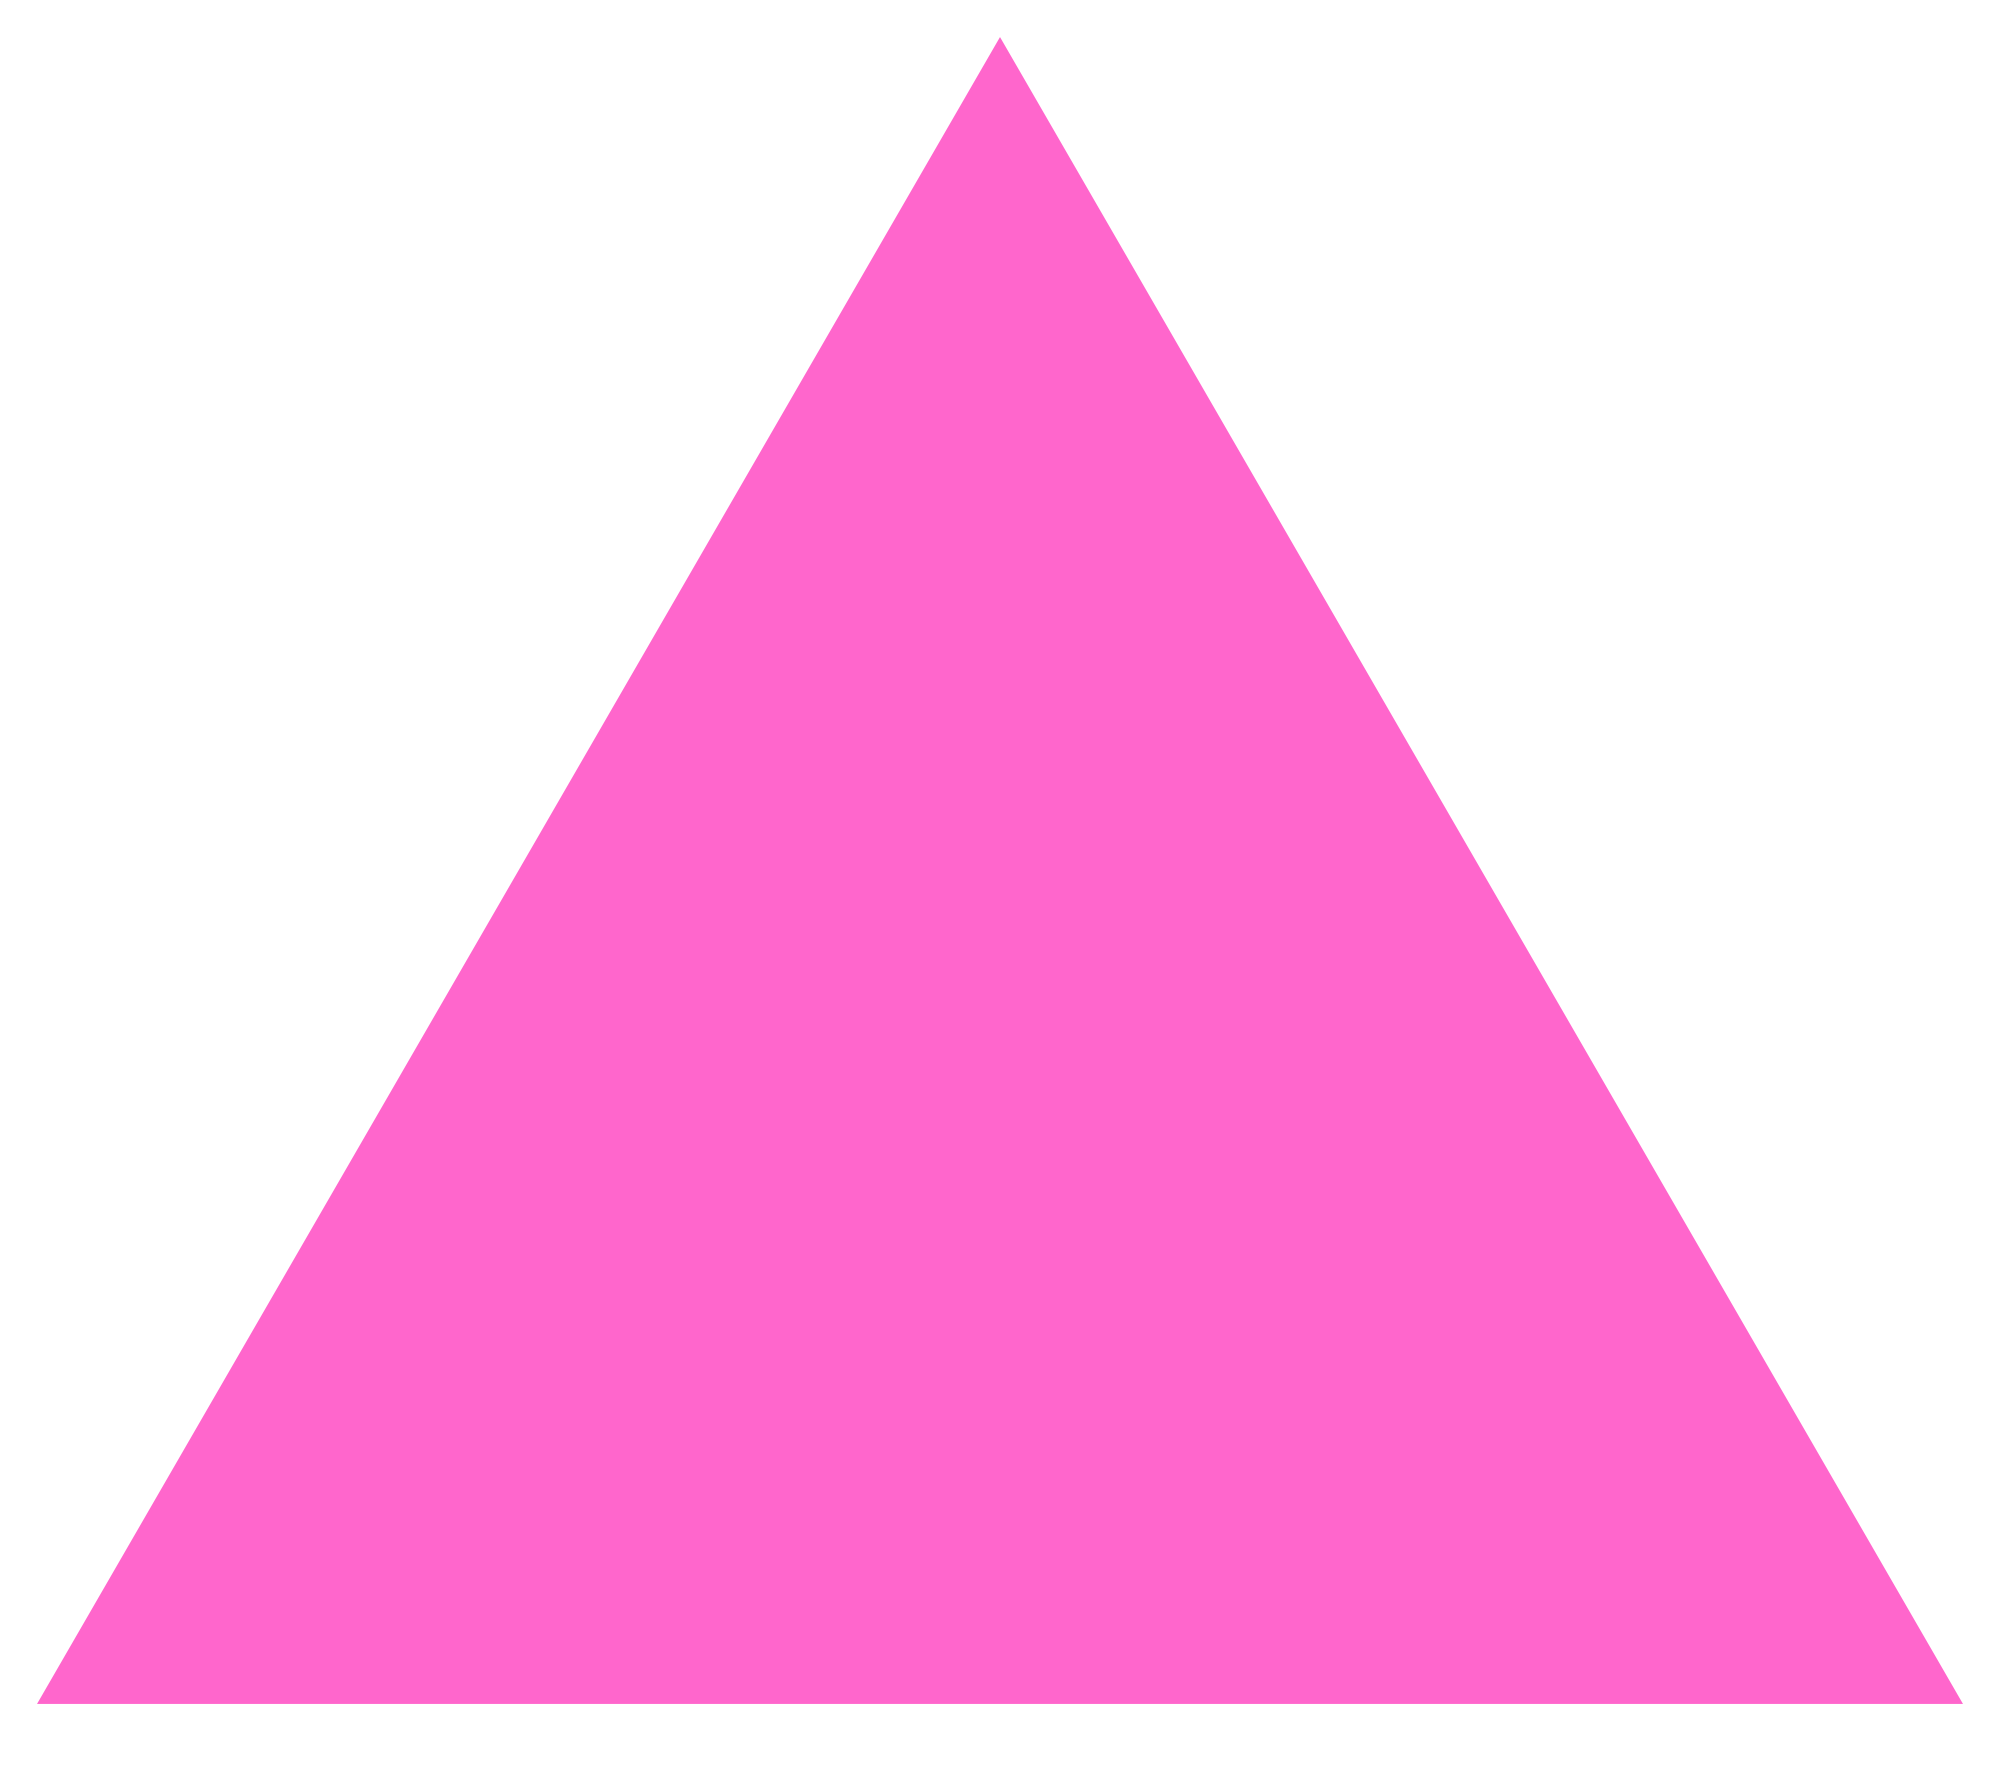 Pink triangle - Wikipedia, the free encyclopedia